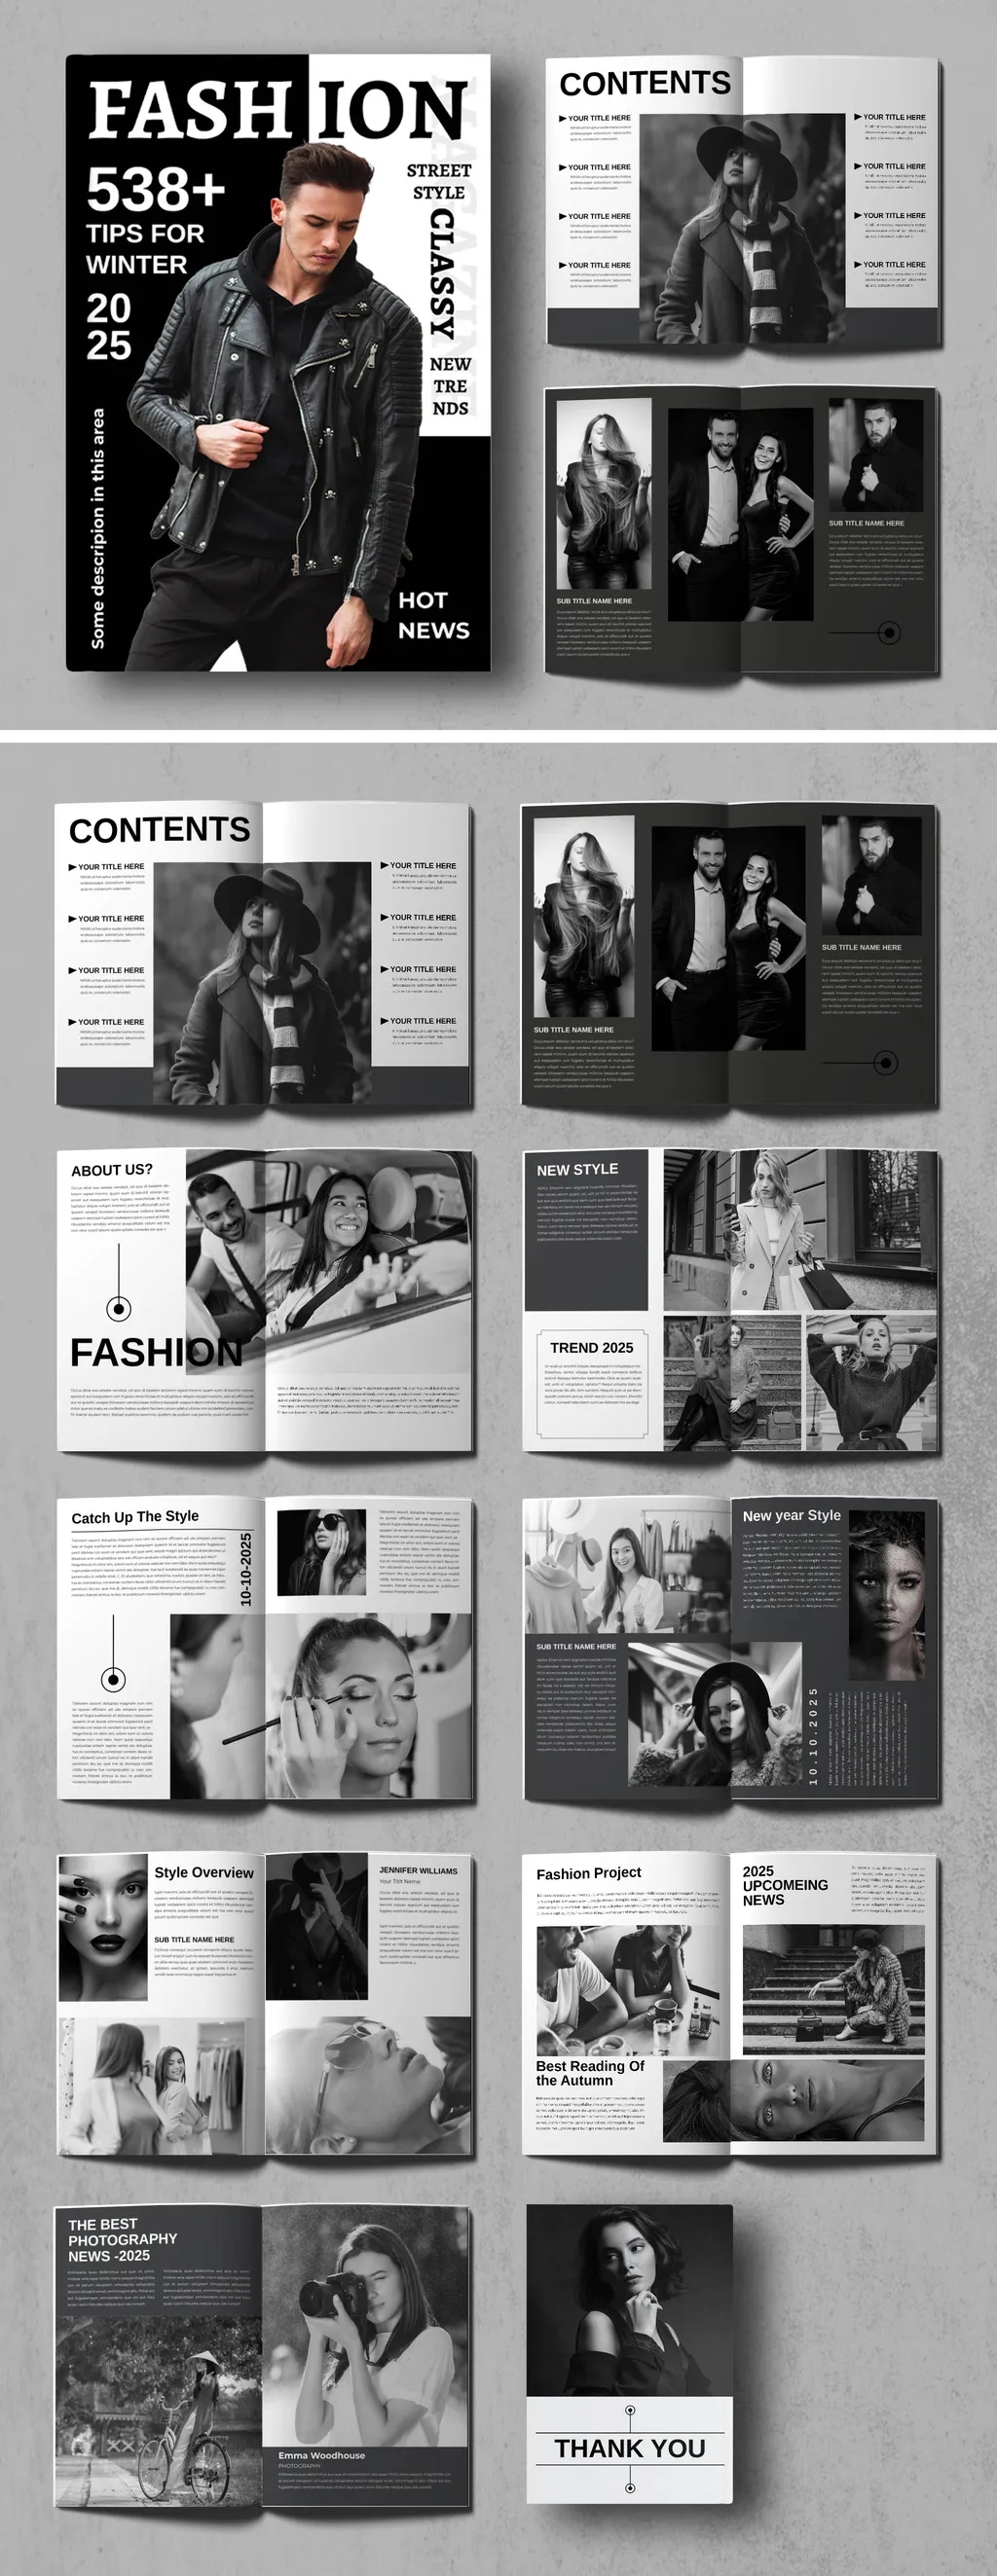 Adobestock - Fashion Magazine Design Layout 718545663